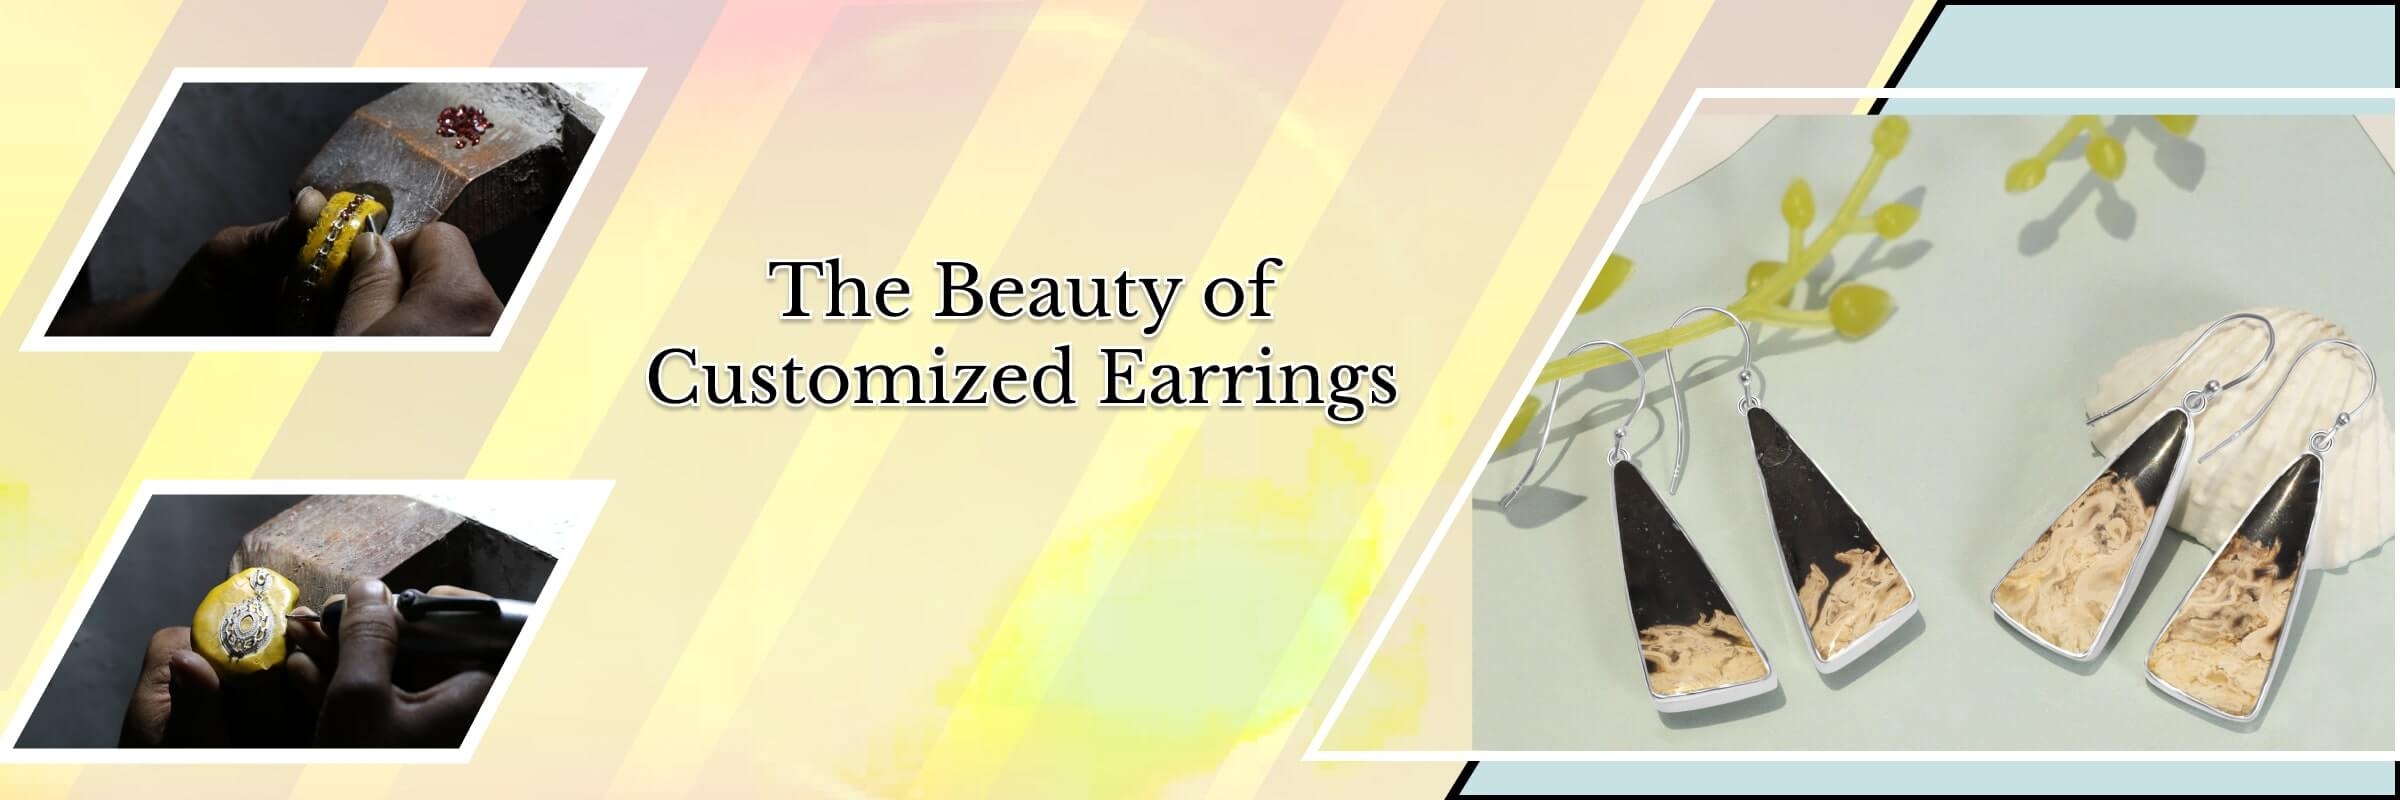 Benefits Of Customized Earrings